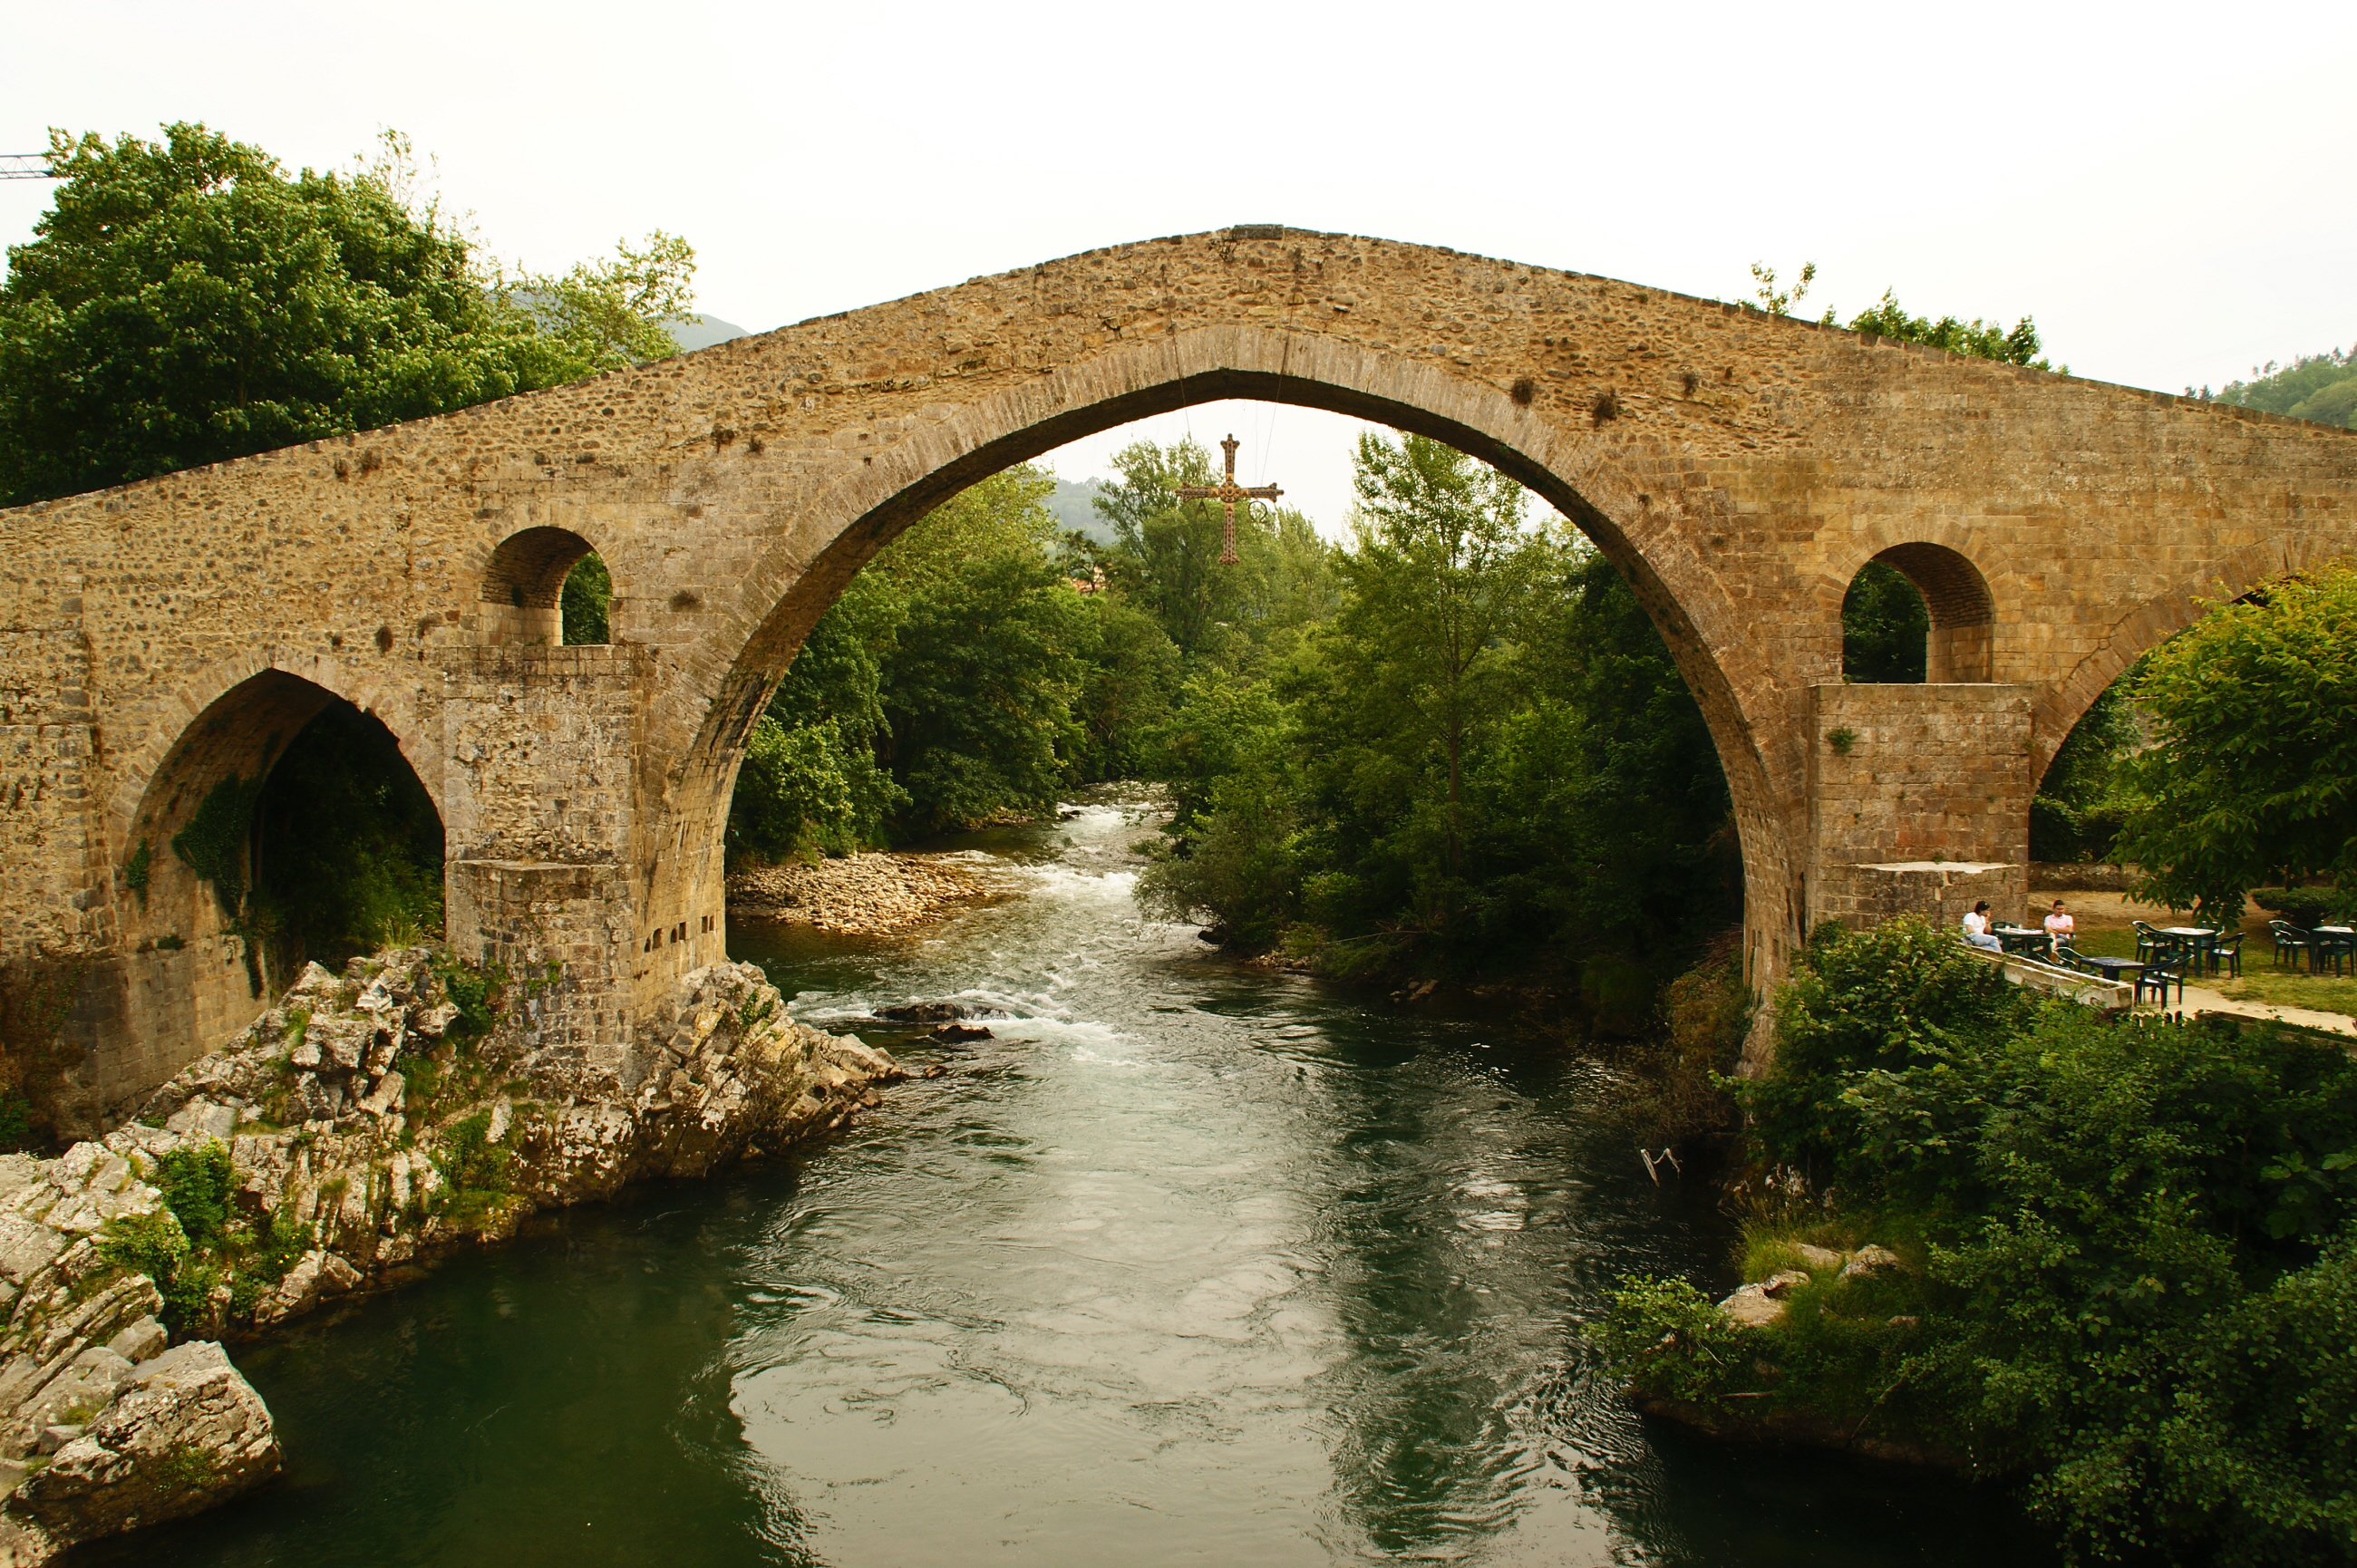 File:Roman bridge at Cangas 1 com.jpg - Wikimedia Commons